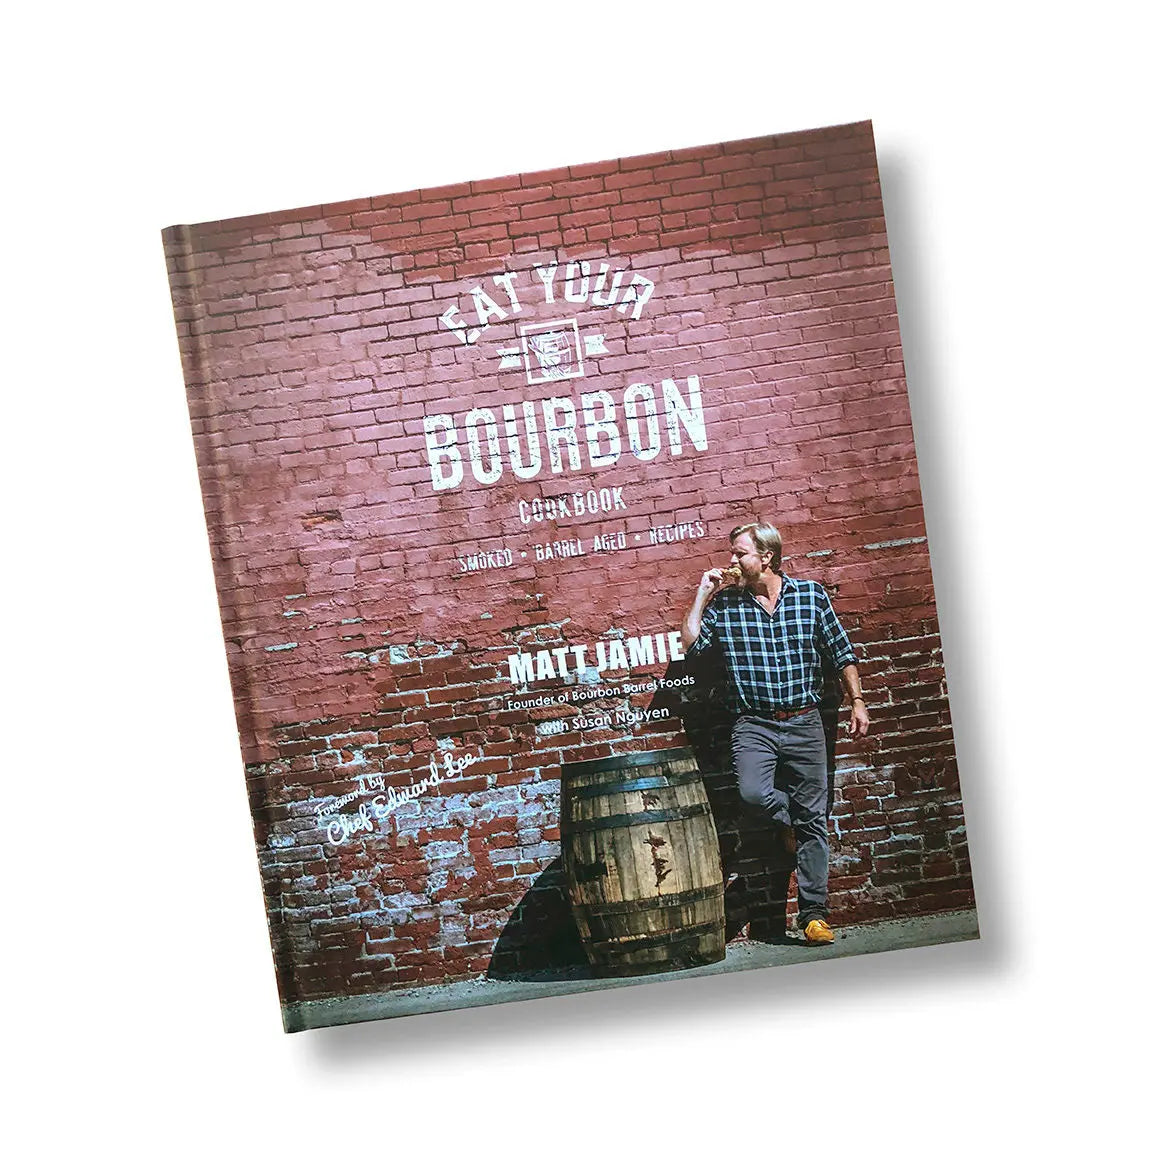 Eat Your Bourbon by Matt Jamie BOURBON BARREL FOODS